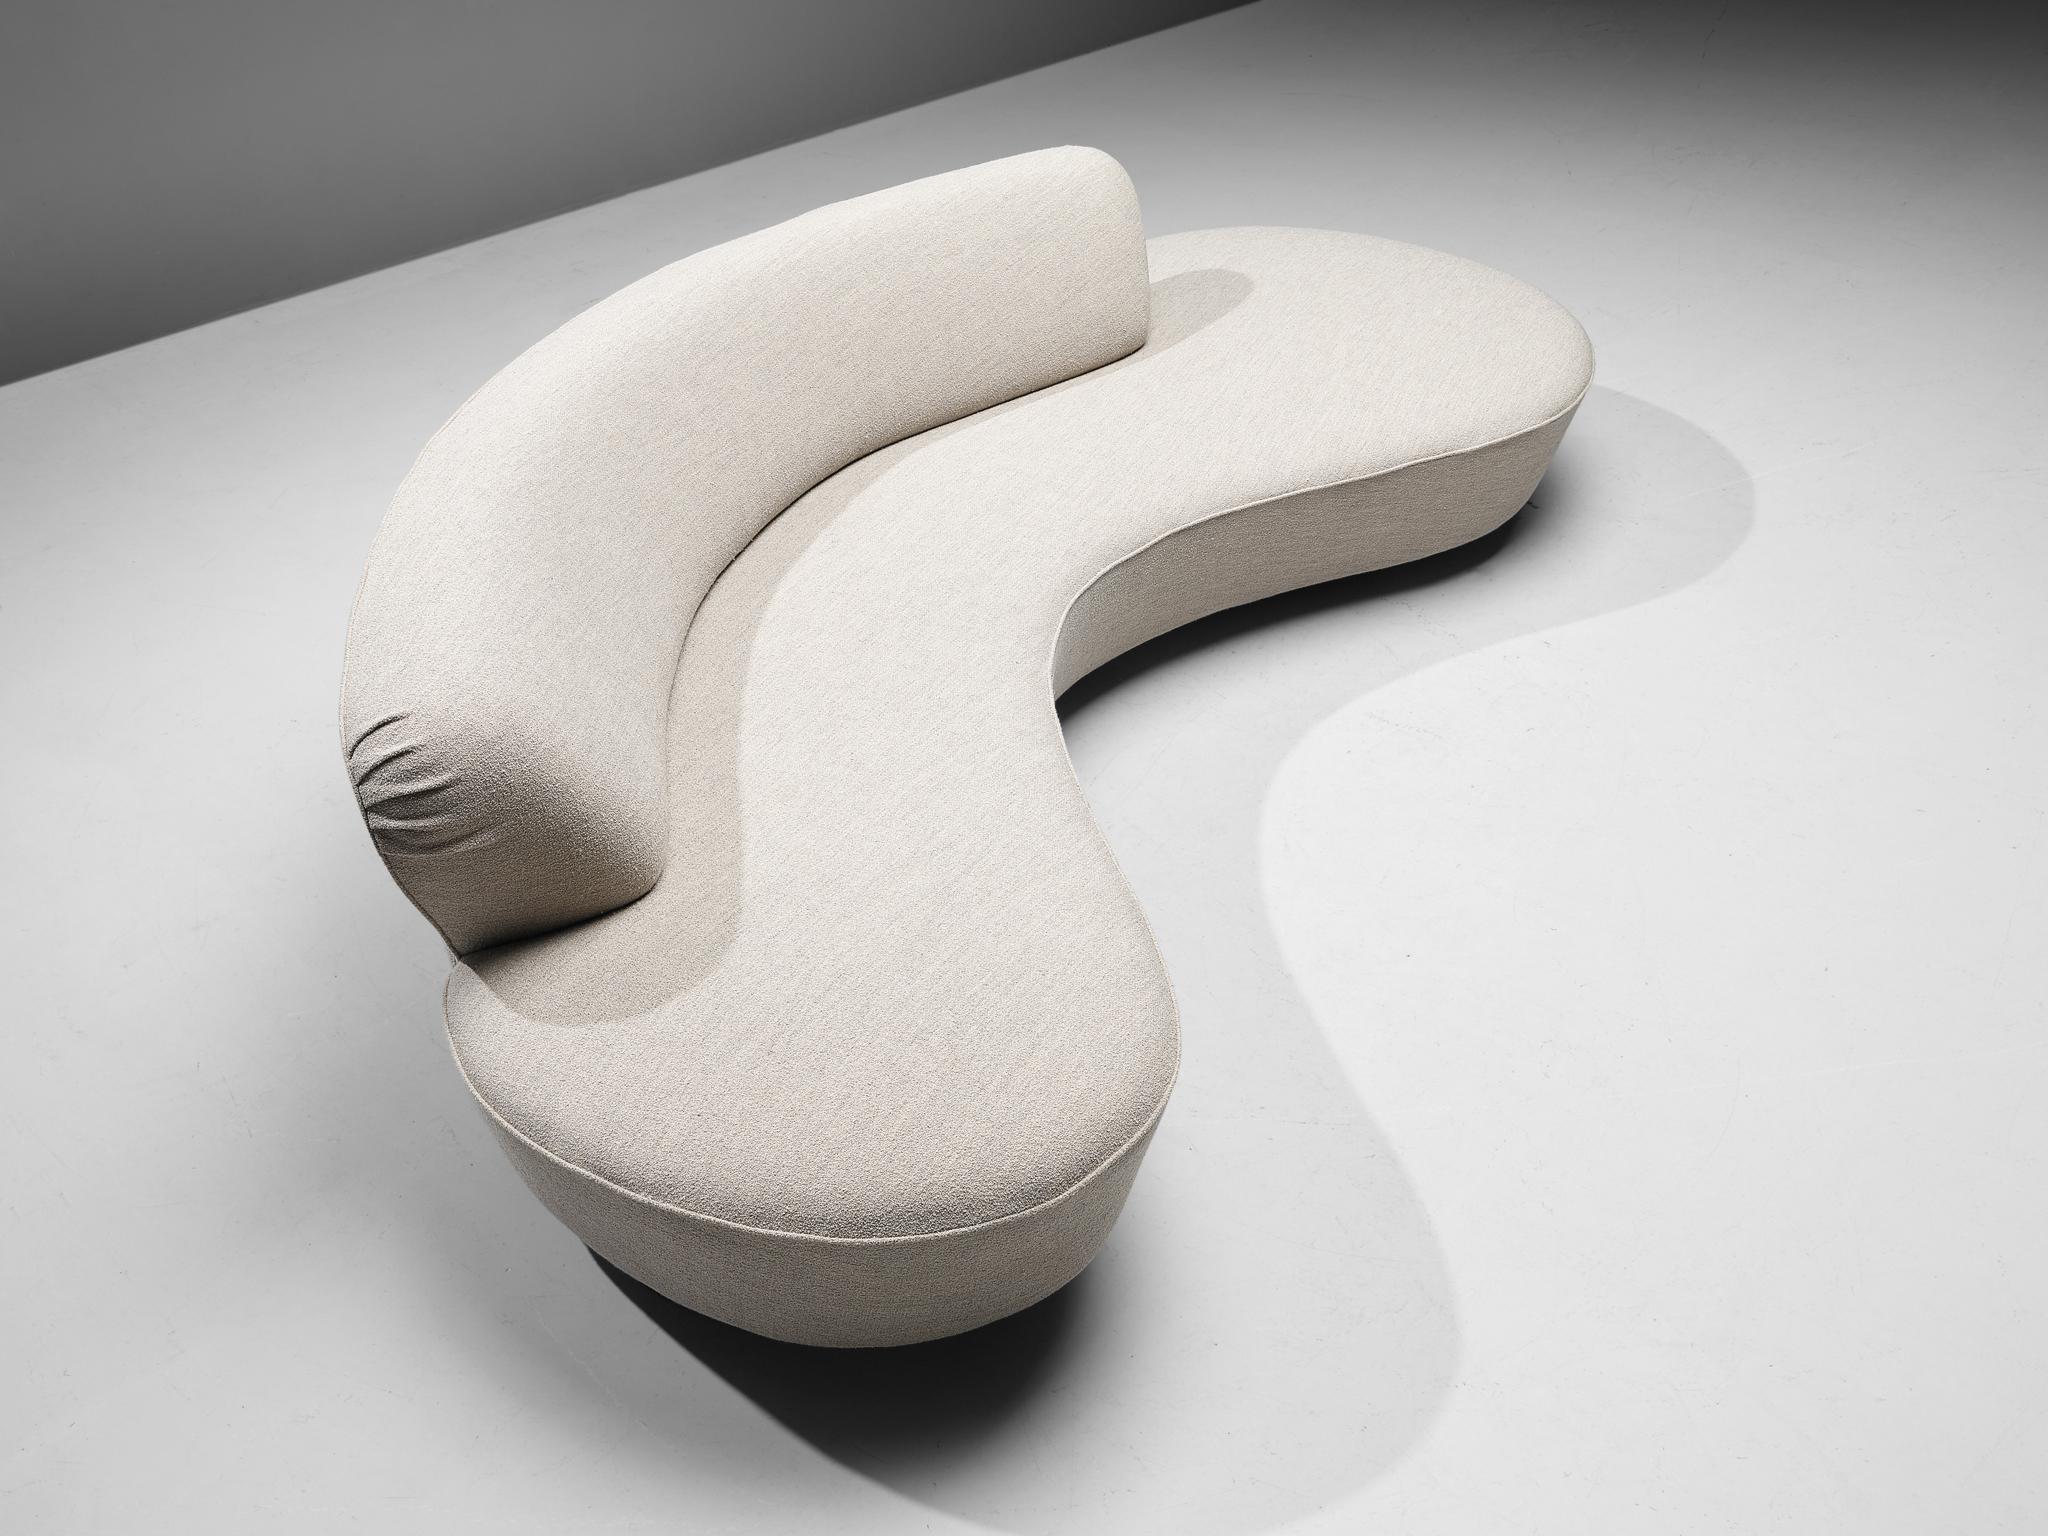 American Iconic Vladimir Kagan ‘Serpentine’ Sofa in White Upholstery